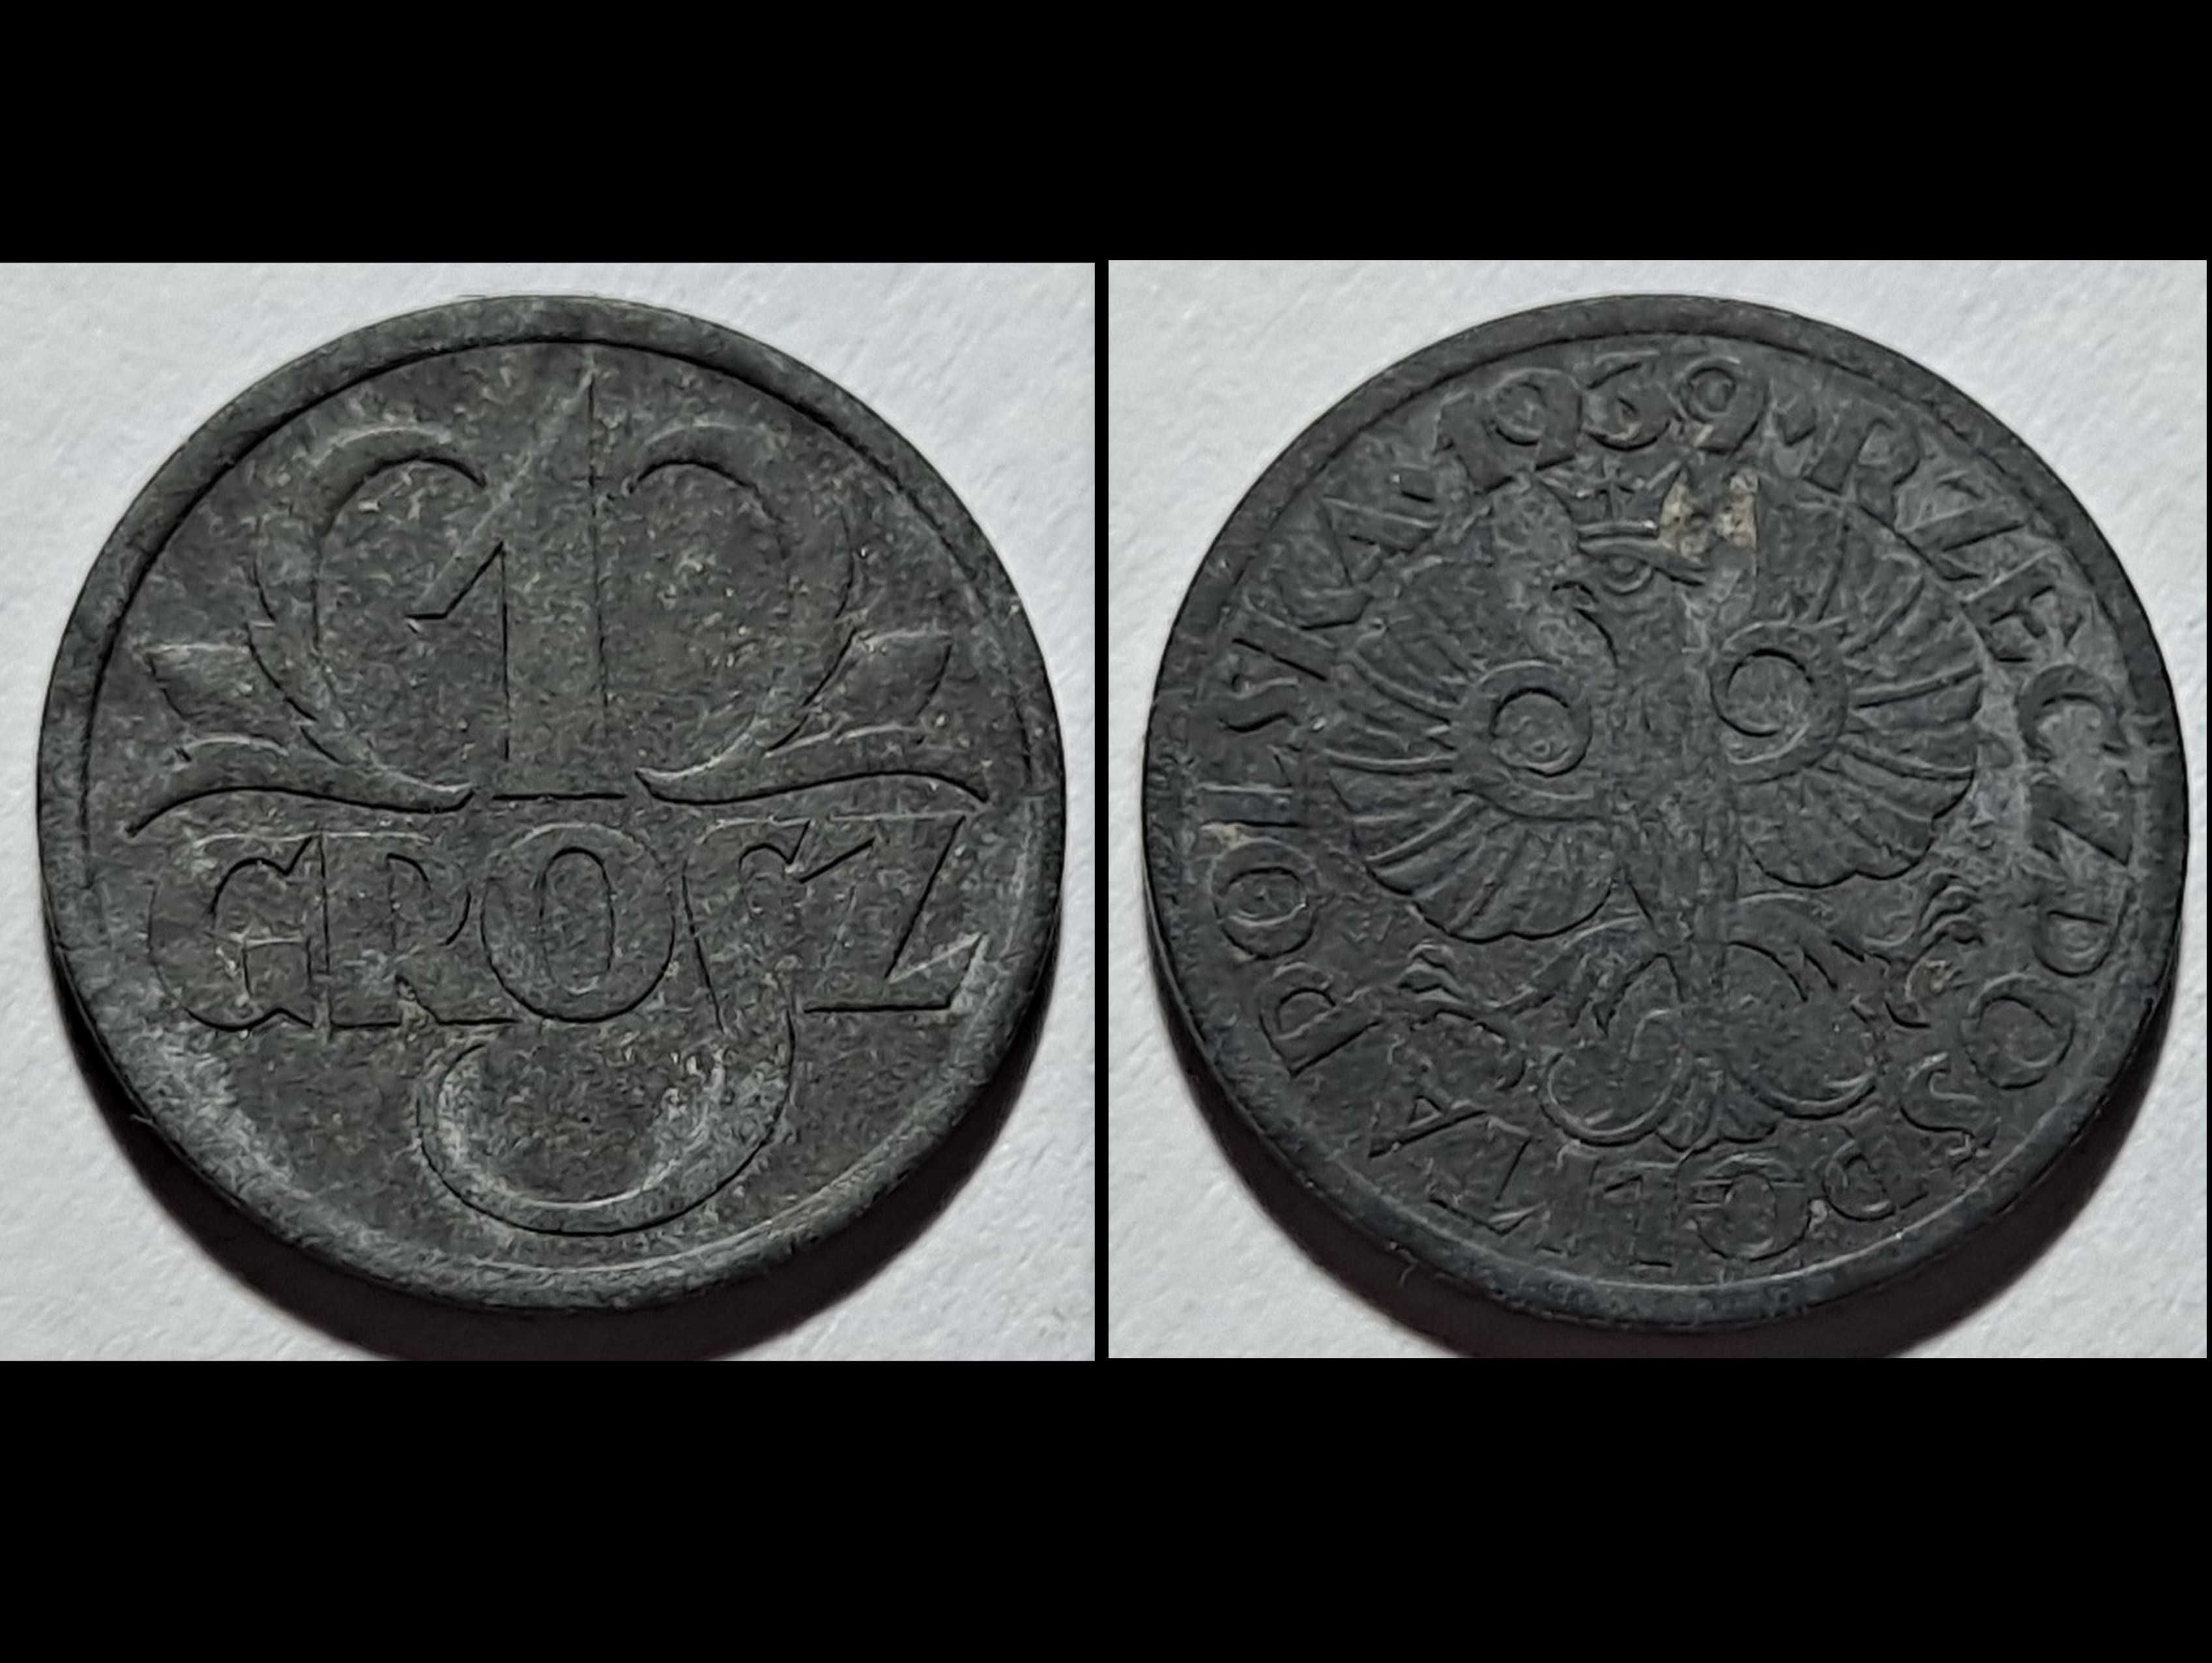 moneta - 1 Grosz - (Polska) II Rzeczpospolita - 1939 r. - cynk (szara)